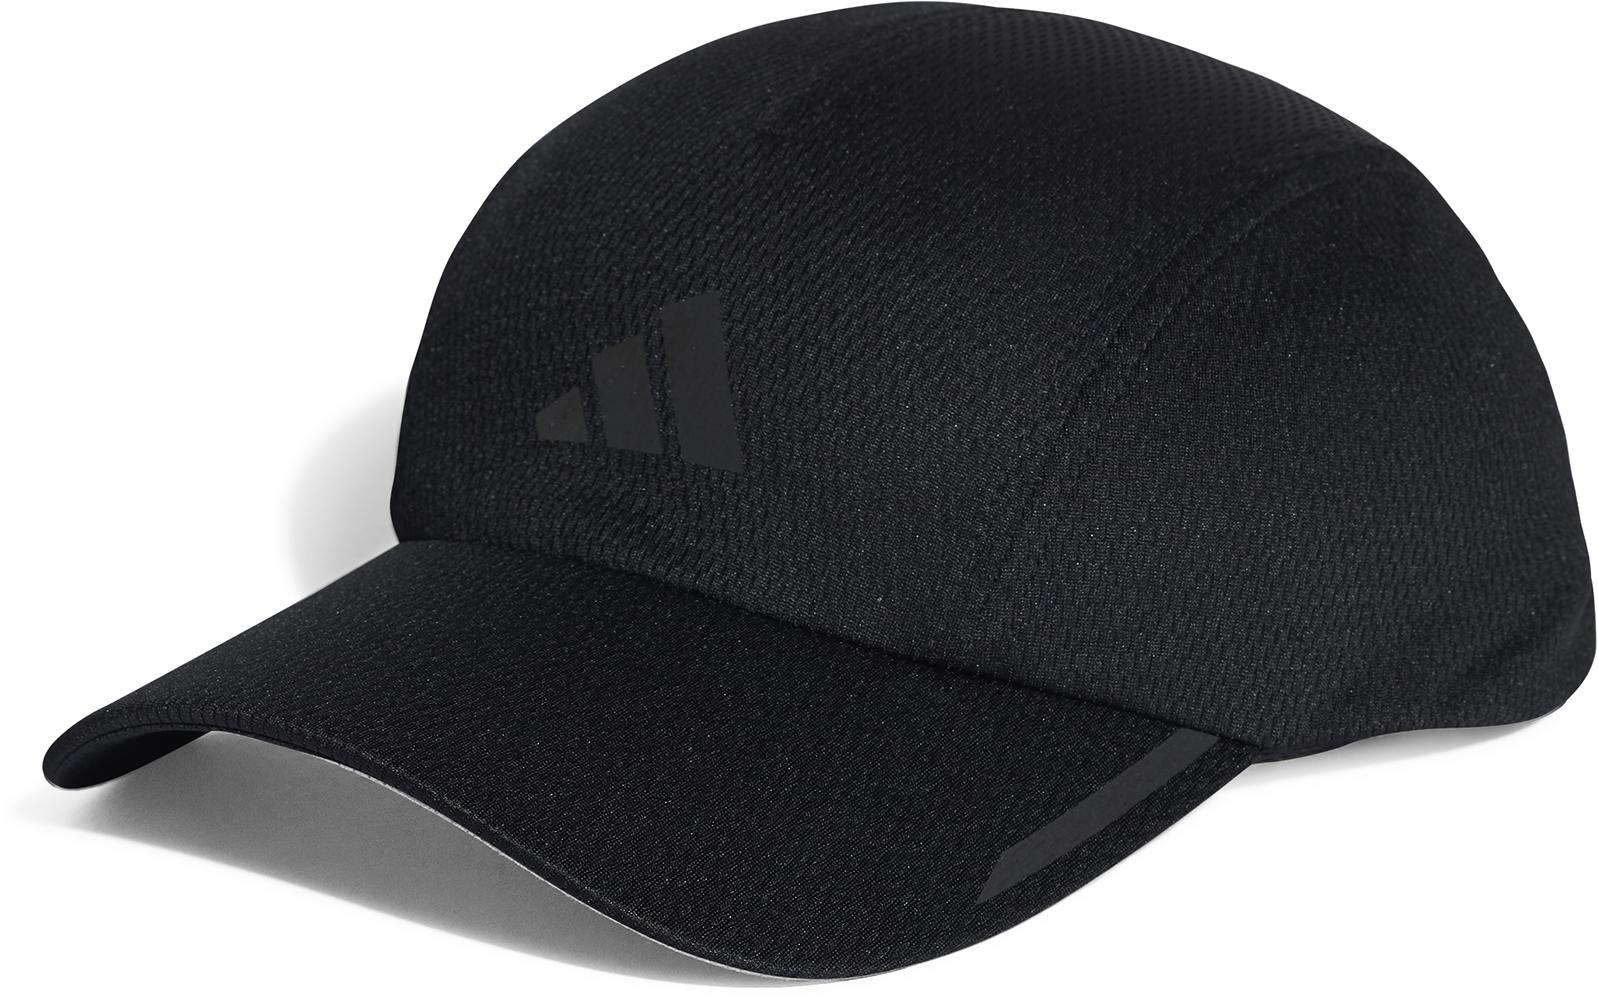 Adidas Aeroready Mesh Runner Cap - Black/black Reflective